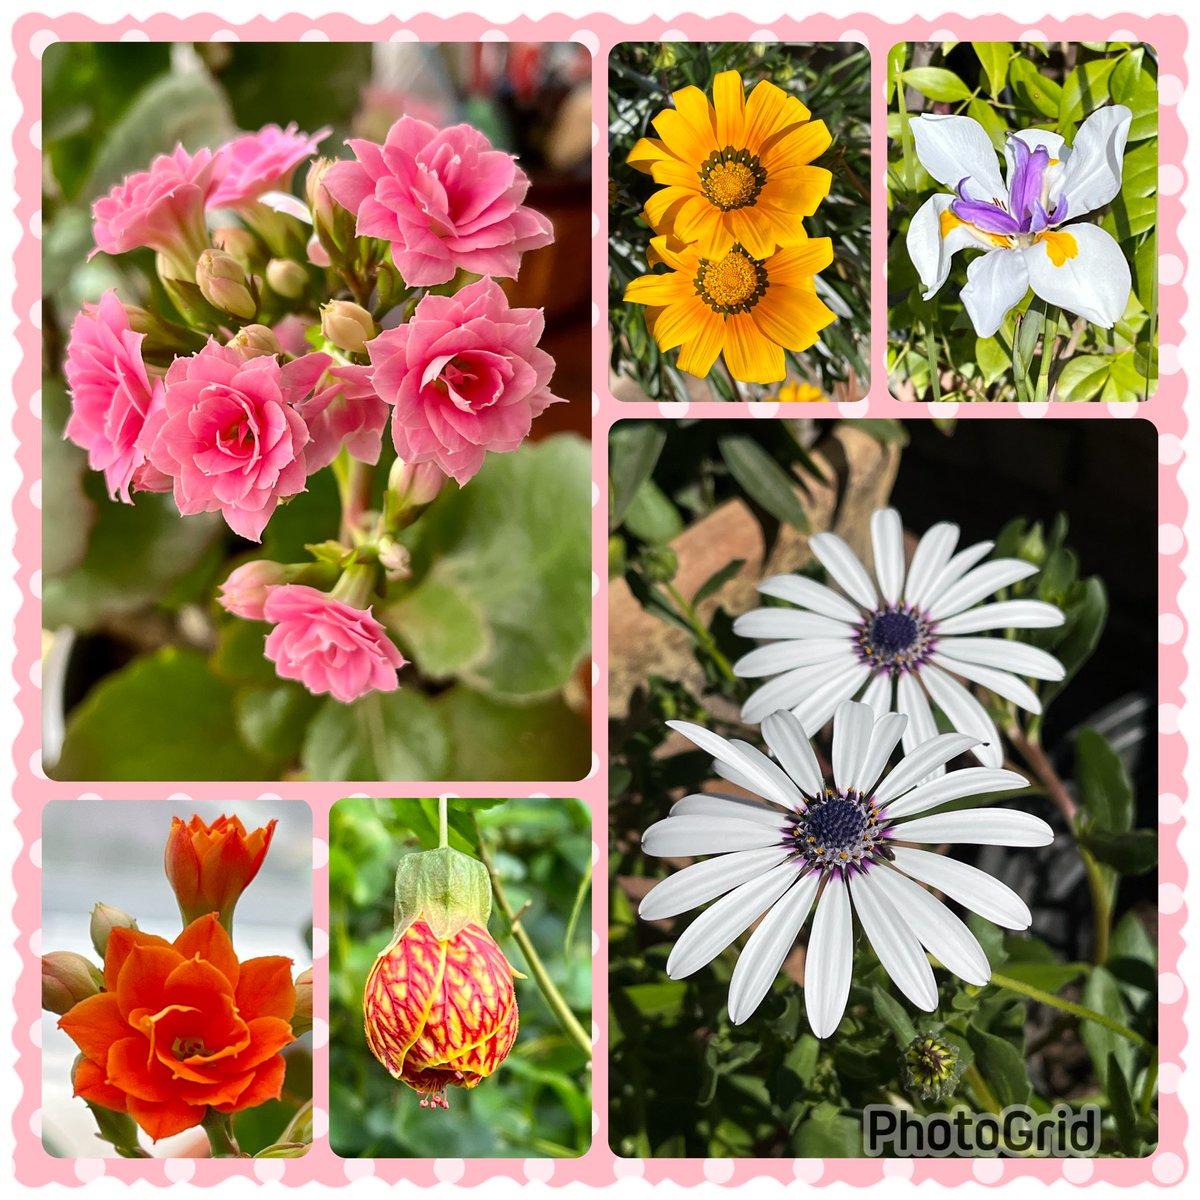 Flowers from my garden. Happy gardening! #SixOnSaturday